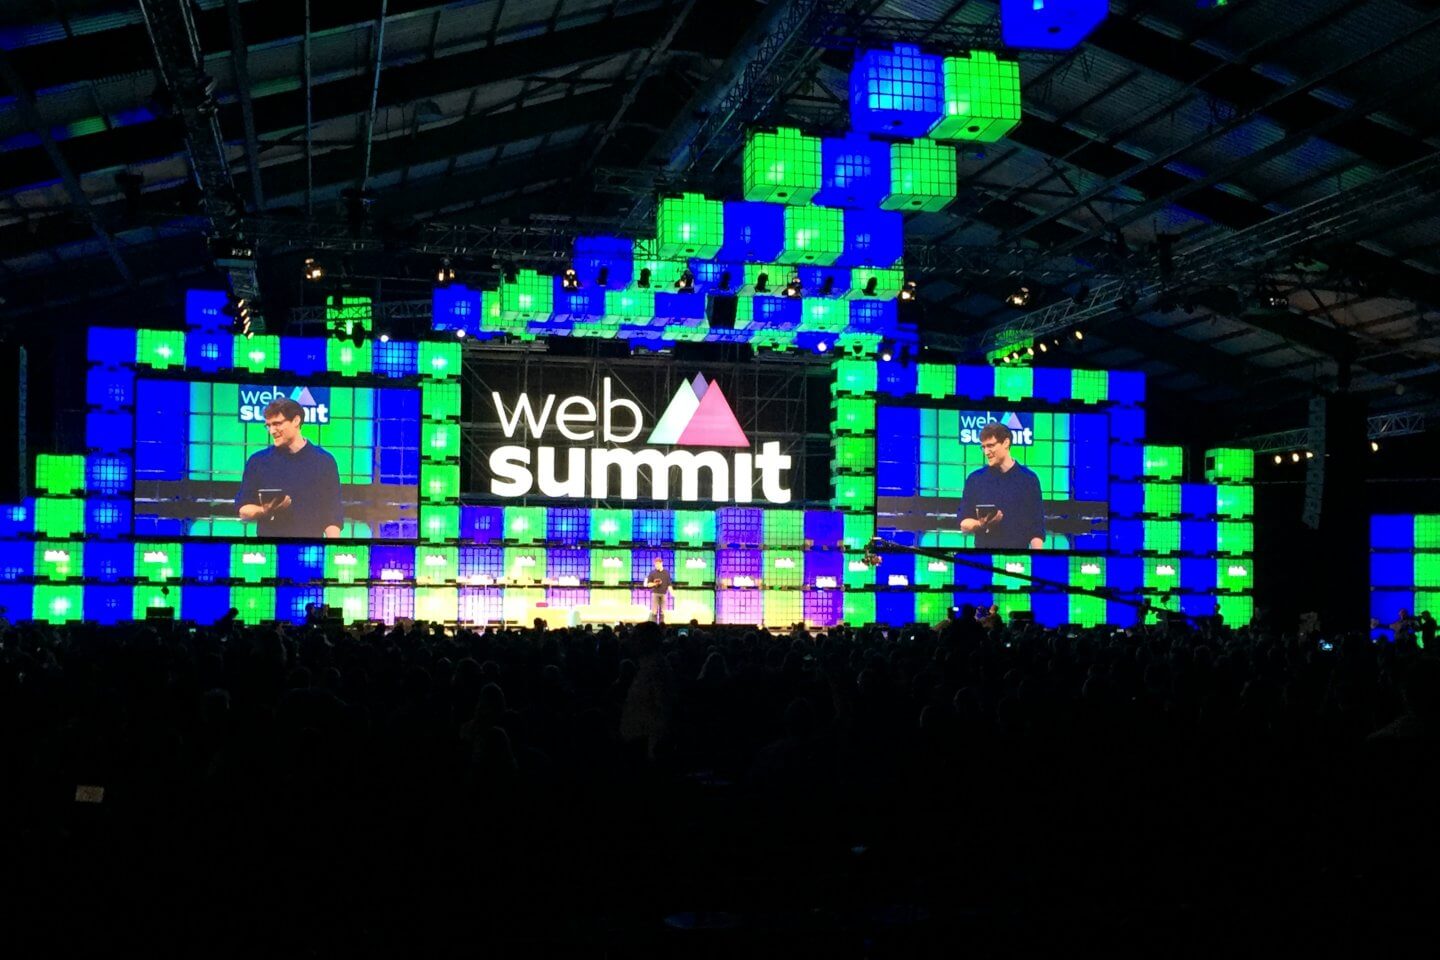 web-summit-2015-opening-session-tsw